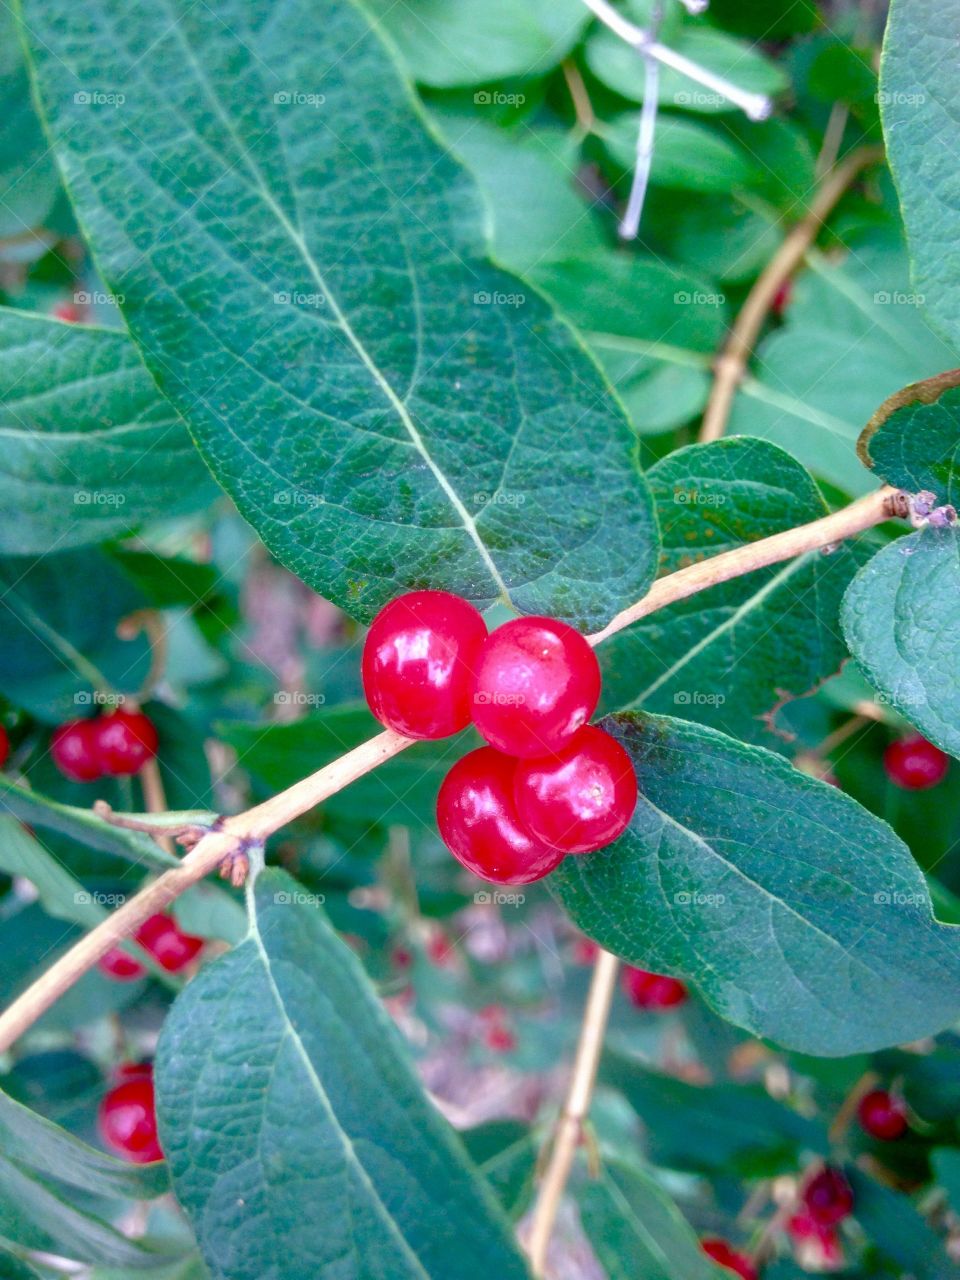 Poison berry